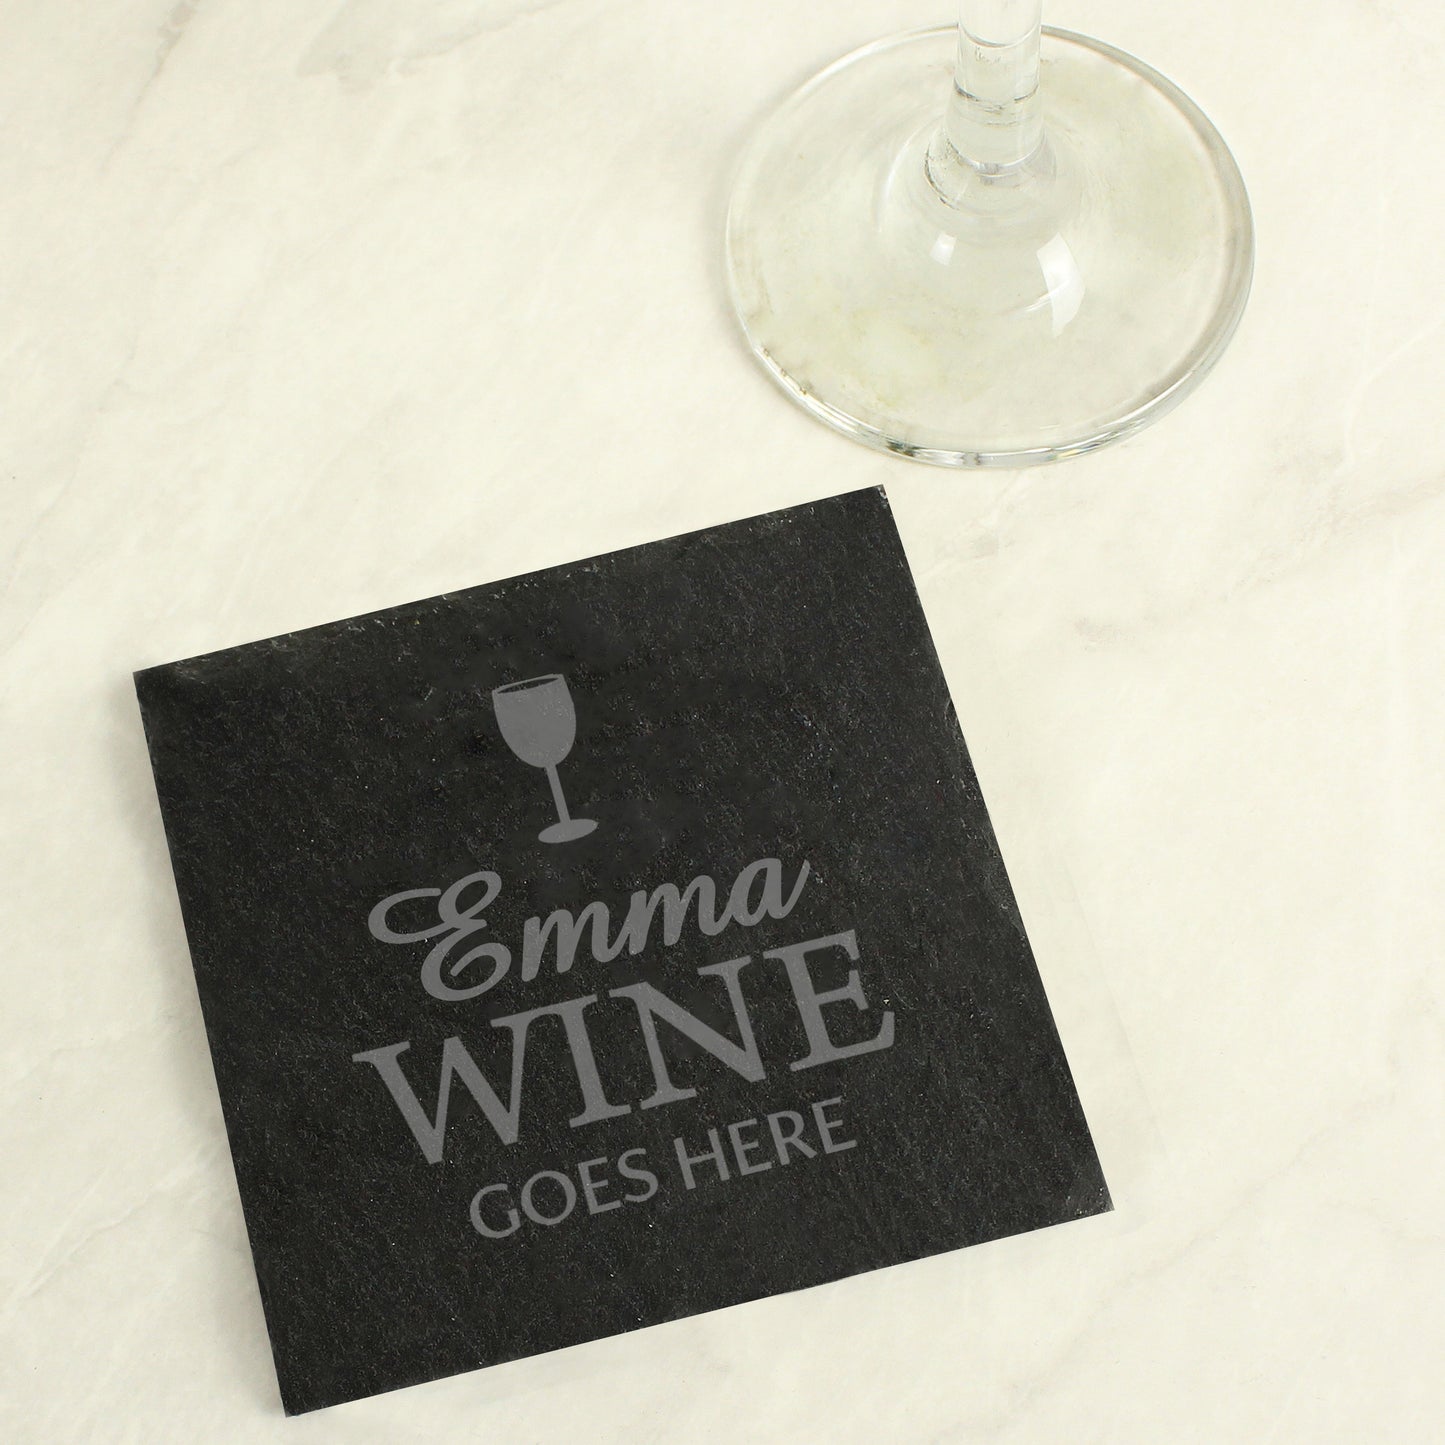 Personalised Wine Goes Here... Single Slate Coaster - Personalise It!